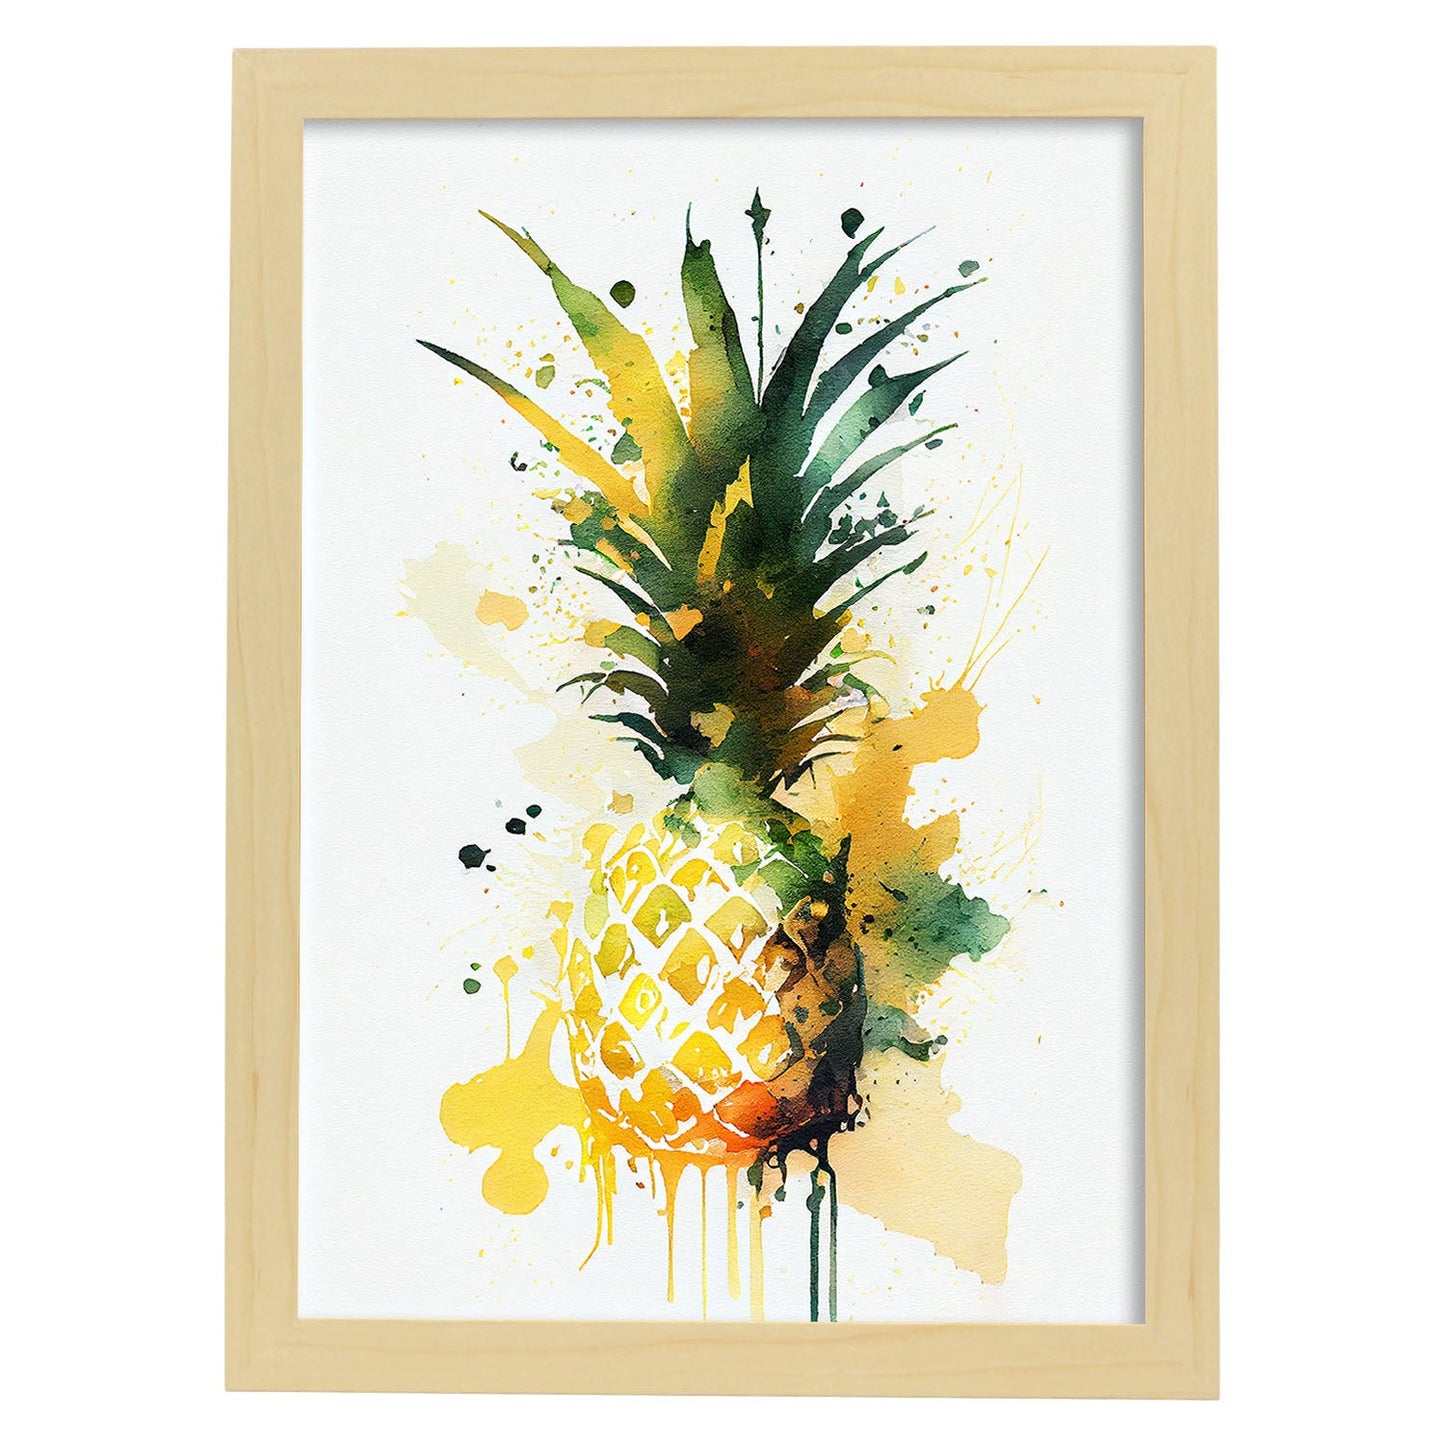 Nacnic minimalist Pineapple_7. Aesthetic Wall Art Prints for Bedroom or Living Room Design.-Artwork-Nacnic-A4-Marco Madera Clara-Nacnic Estudio SL